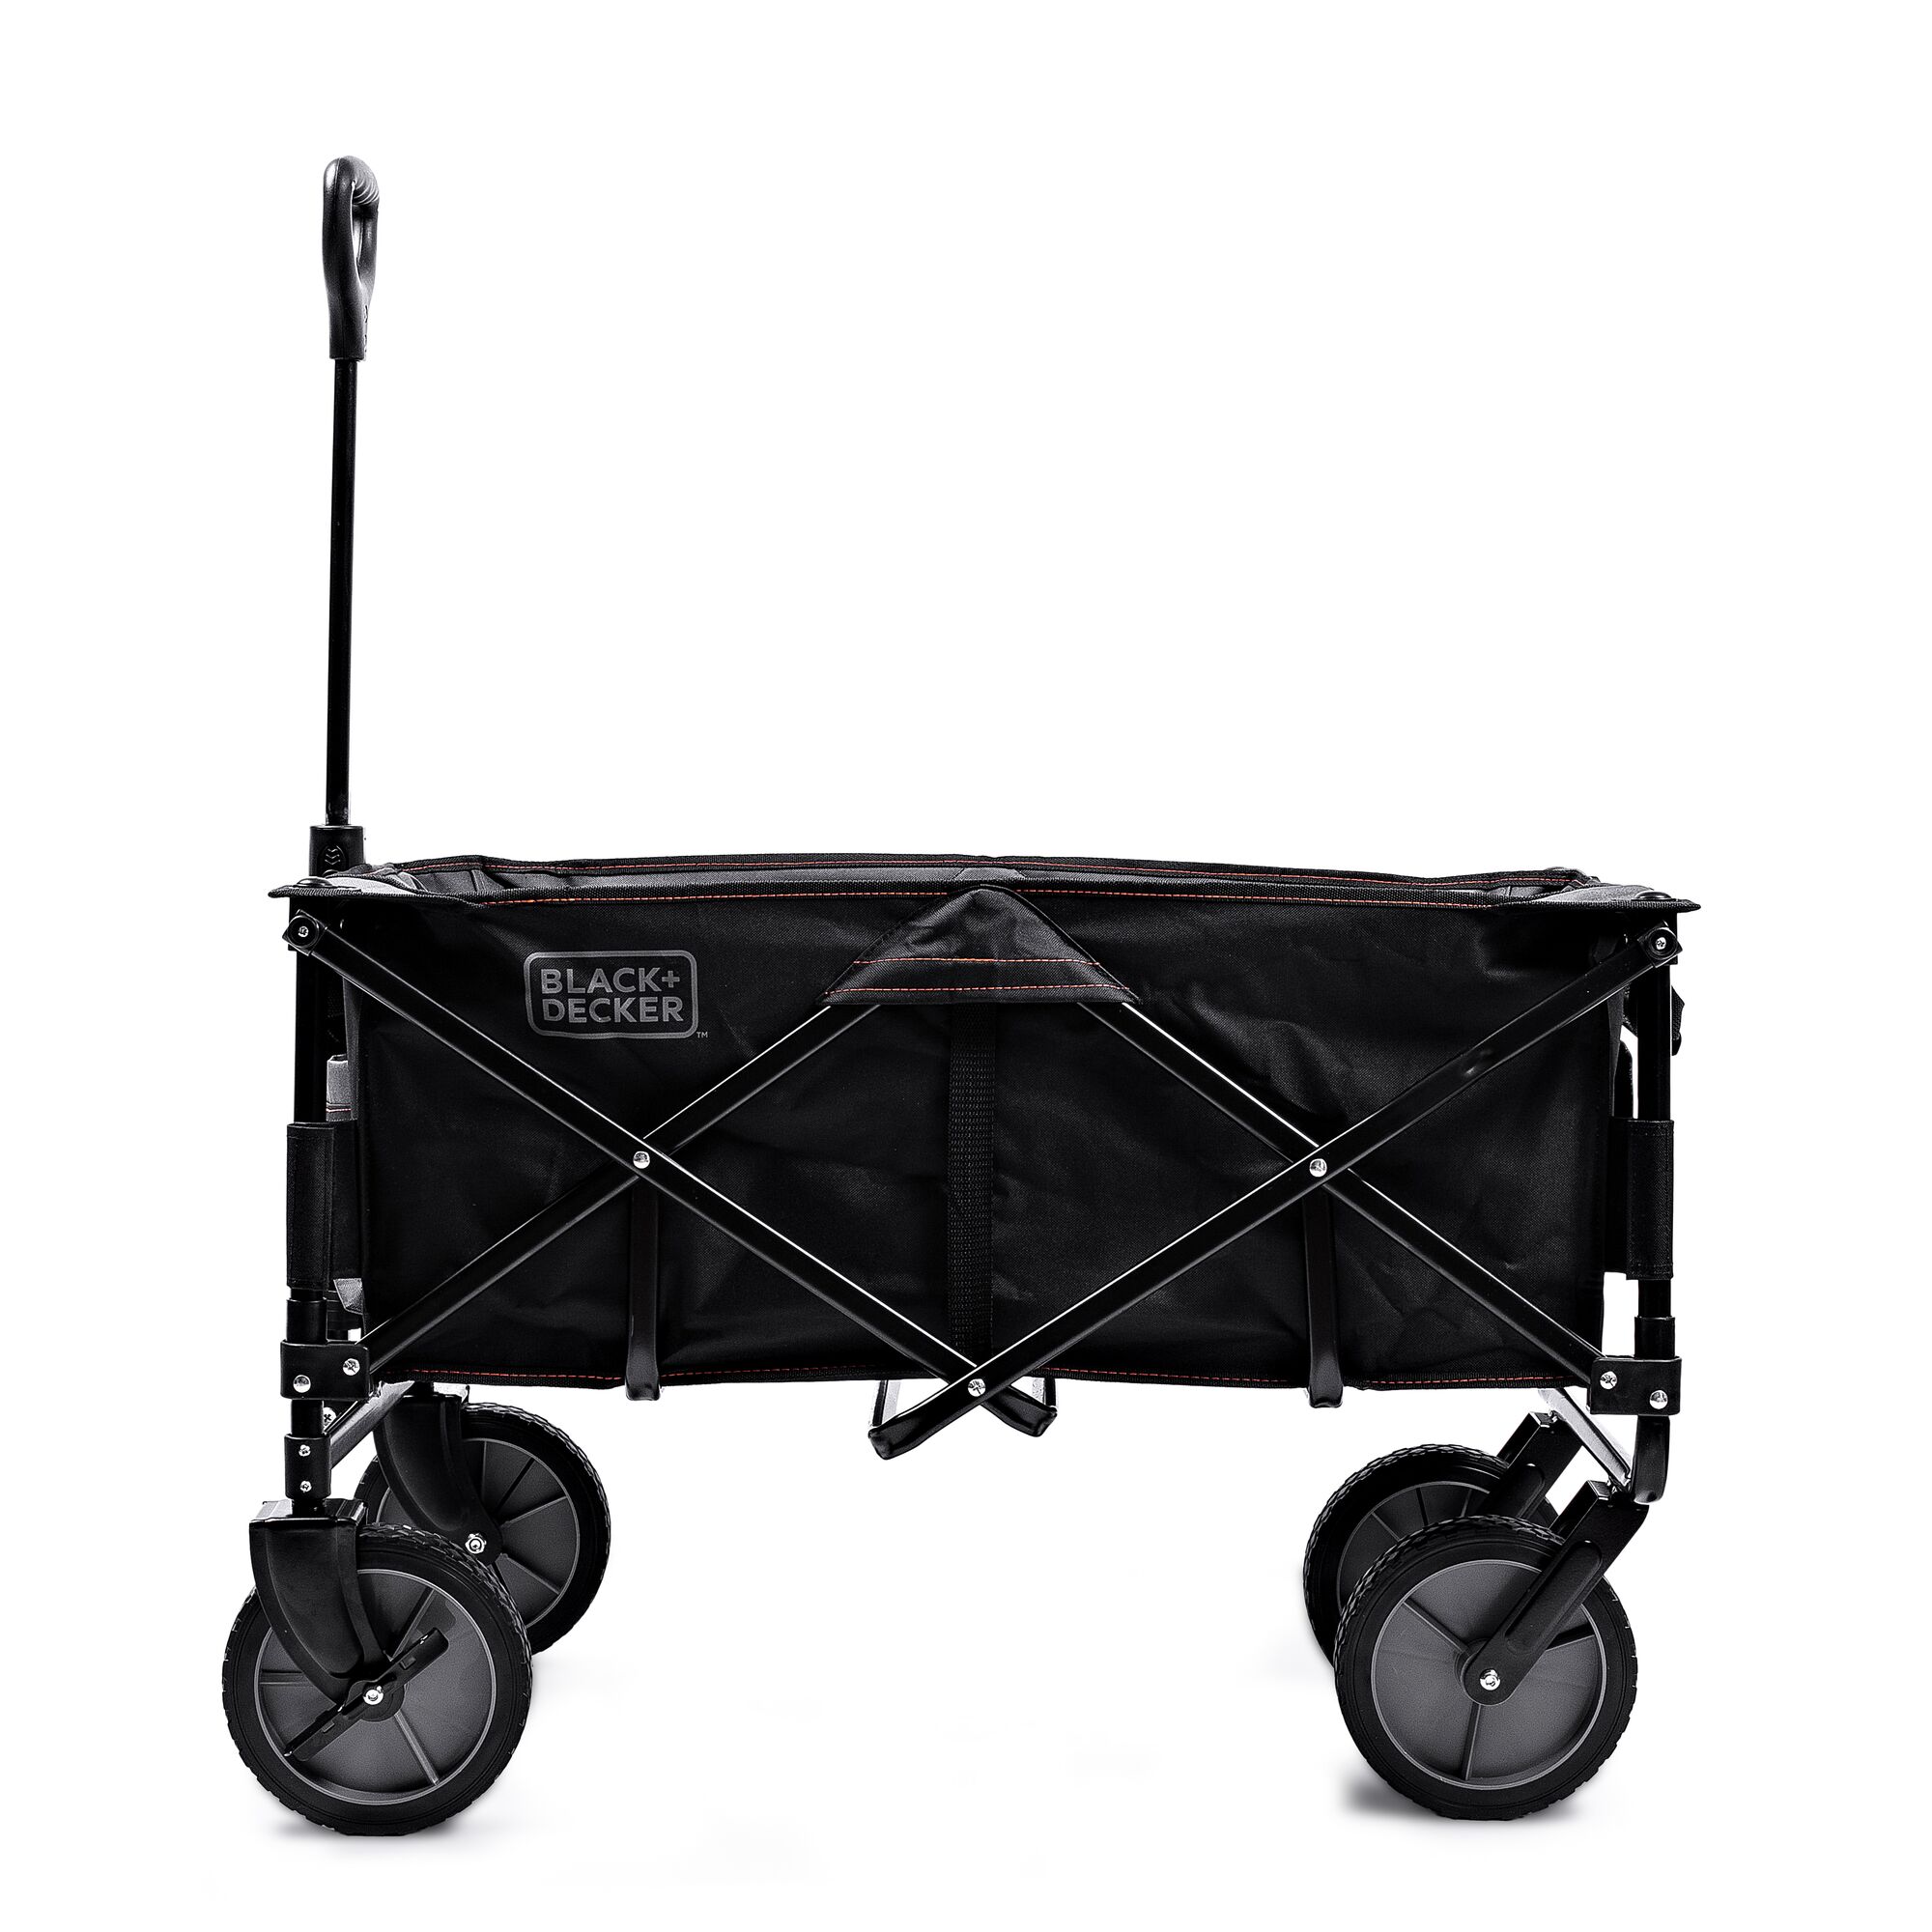 BLACK+DECKER utility wagon, collapsible/folding wagon